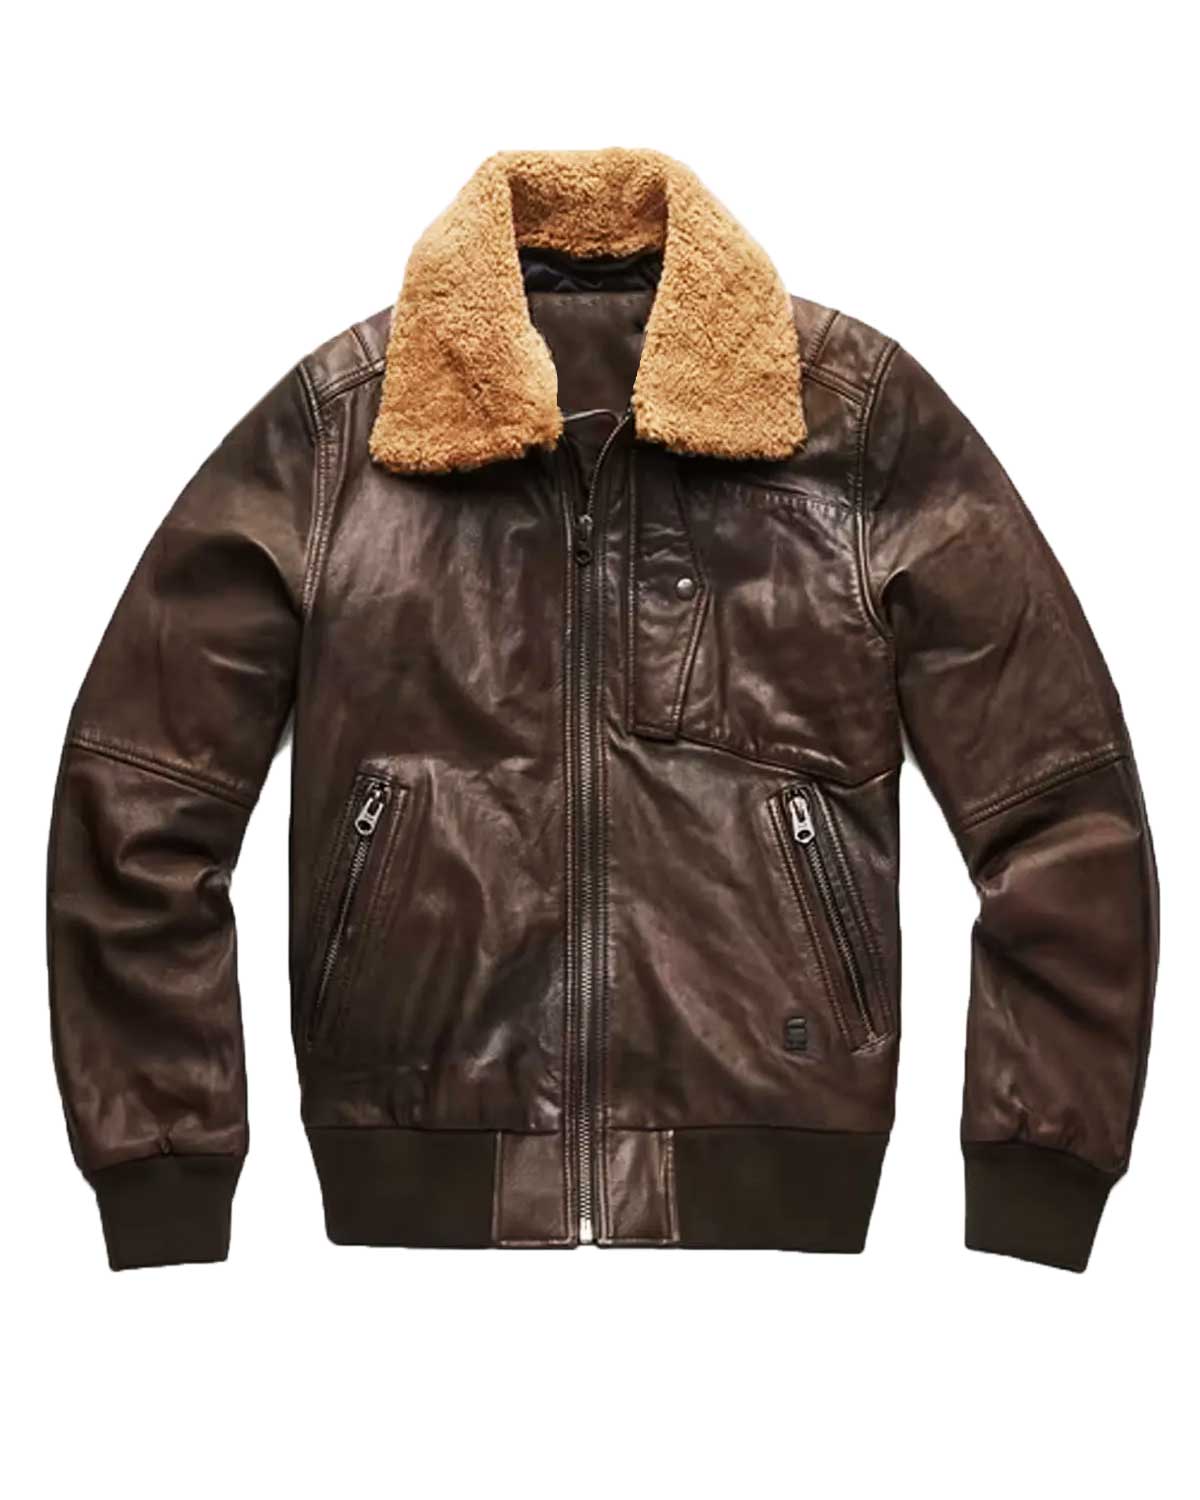 Bollard Brown Leather Jacket With Detachable Fur Collar 